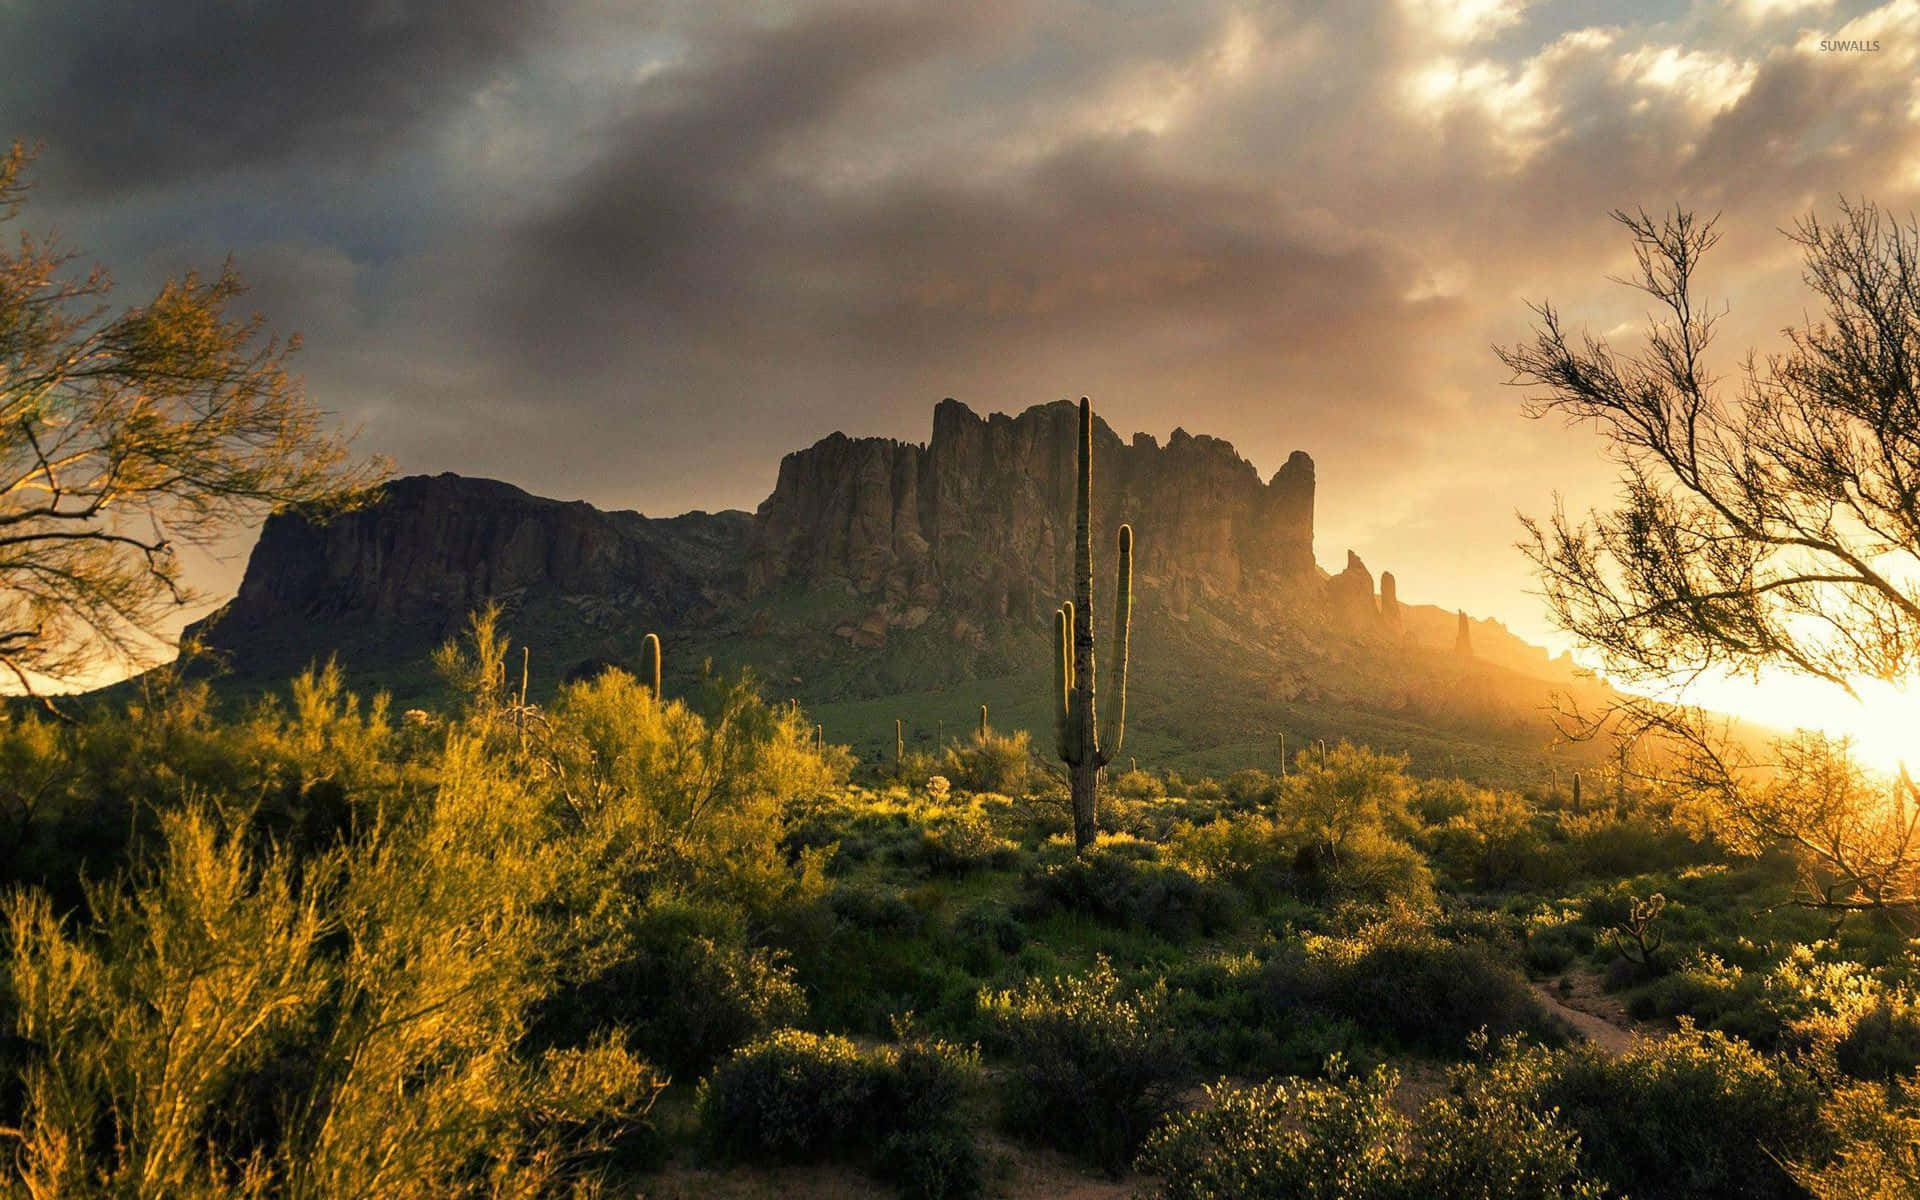 Desert Scenery in Arizona